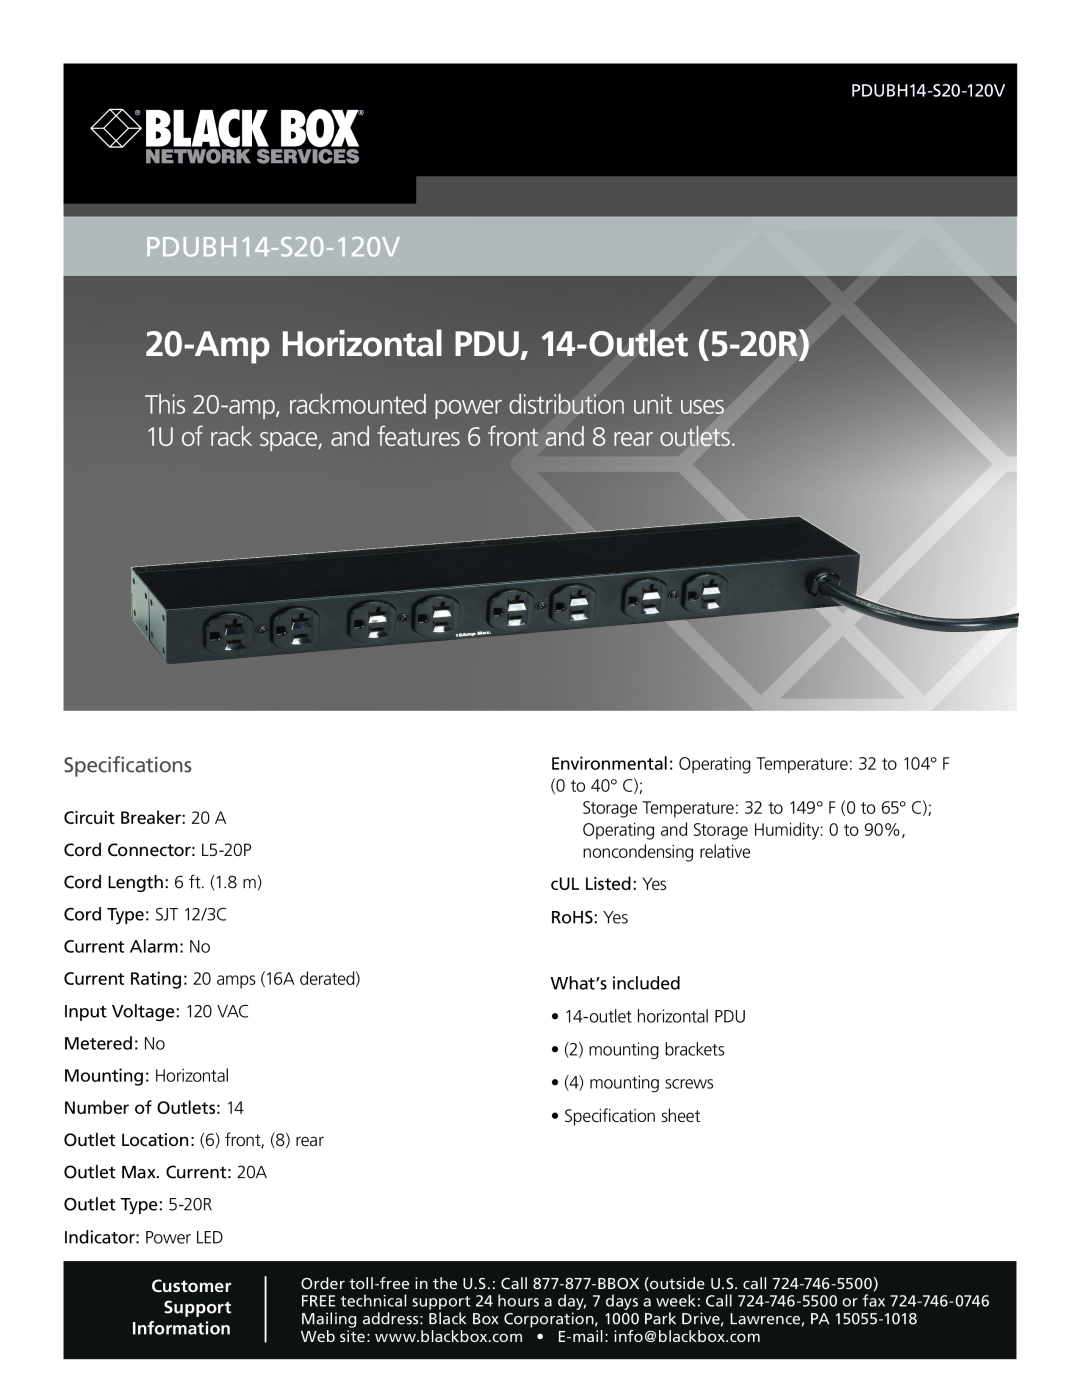 Black Box 20-Amp Horizontal PDU, 14 Outlet (5-20R) specifications Specifications, AmpHorizontal PDU, 14-Outlet 5-20R 